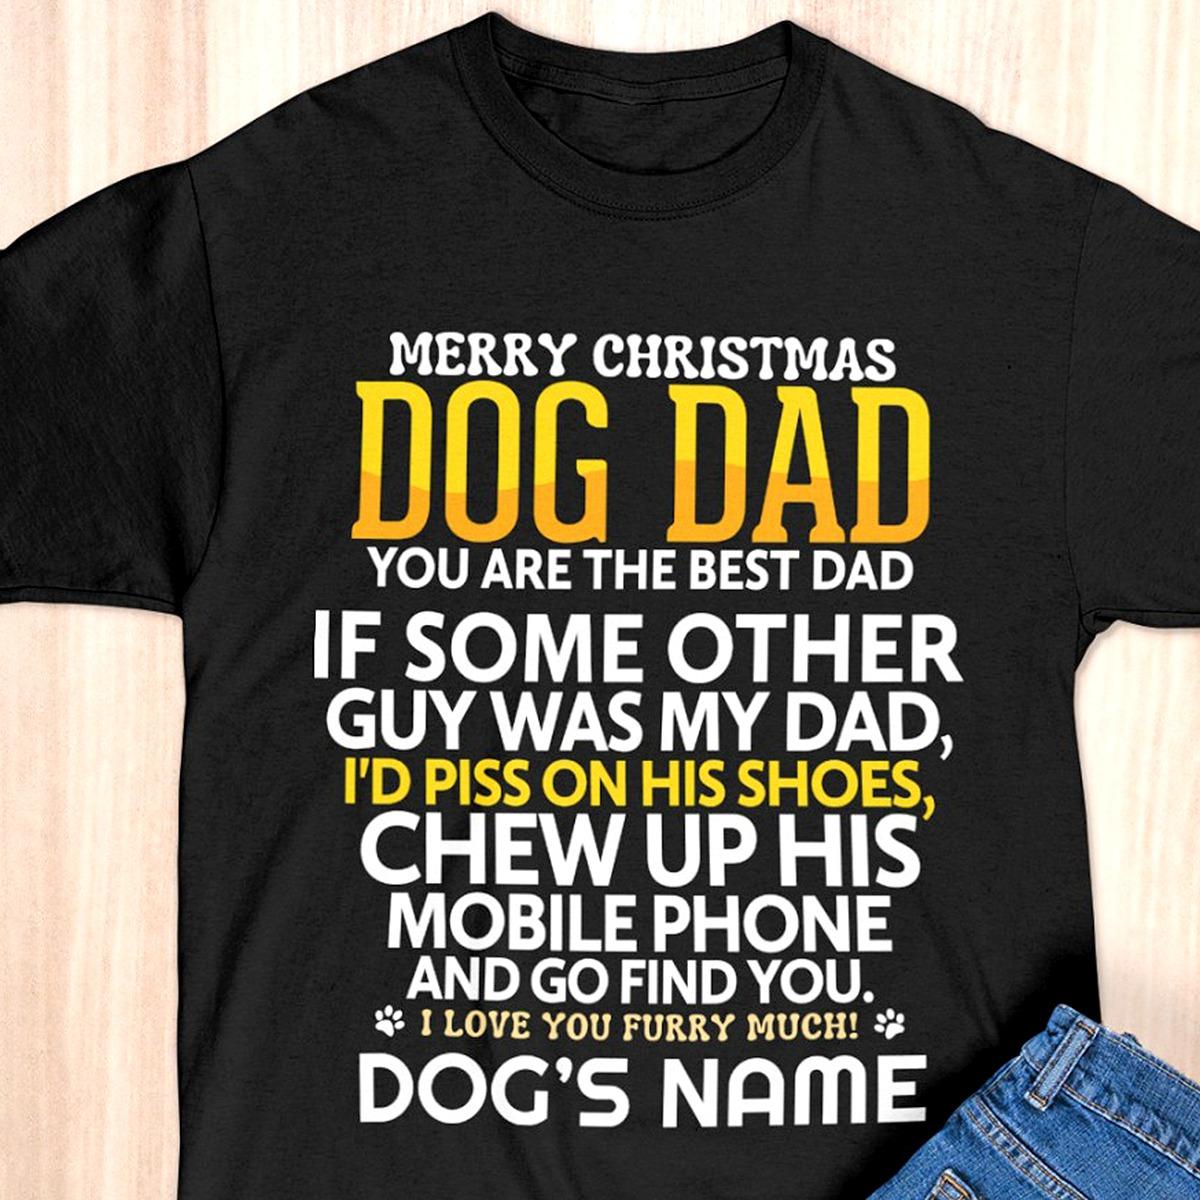 Merry Christmas dog dad - Father of dog, Christmas day ugly sweater